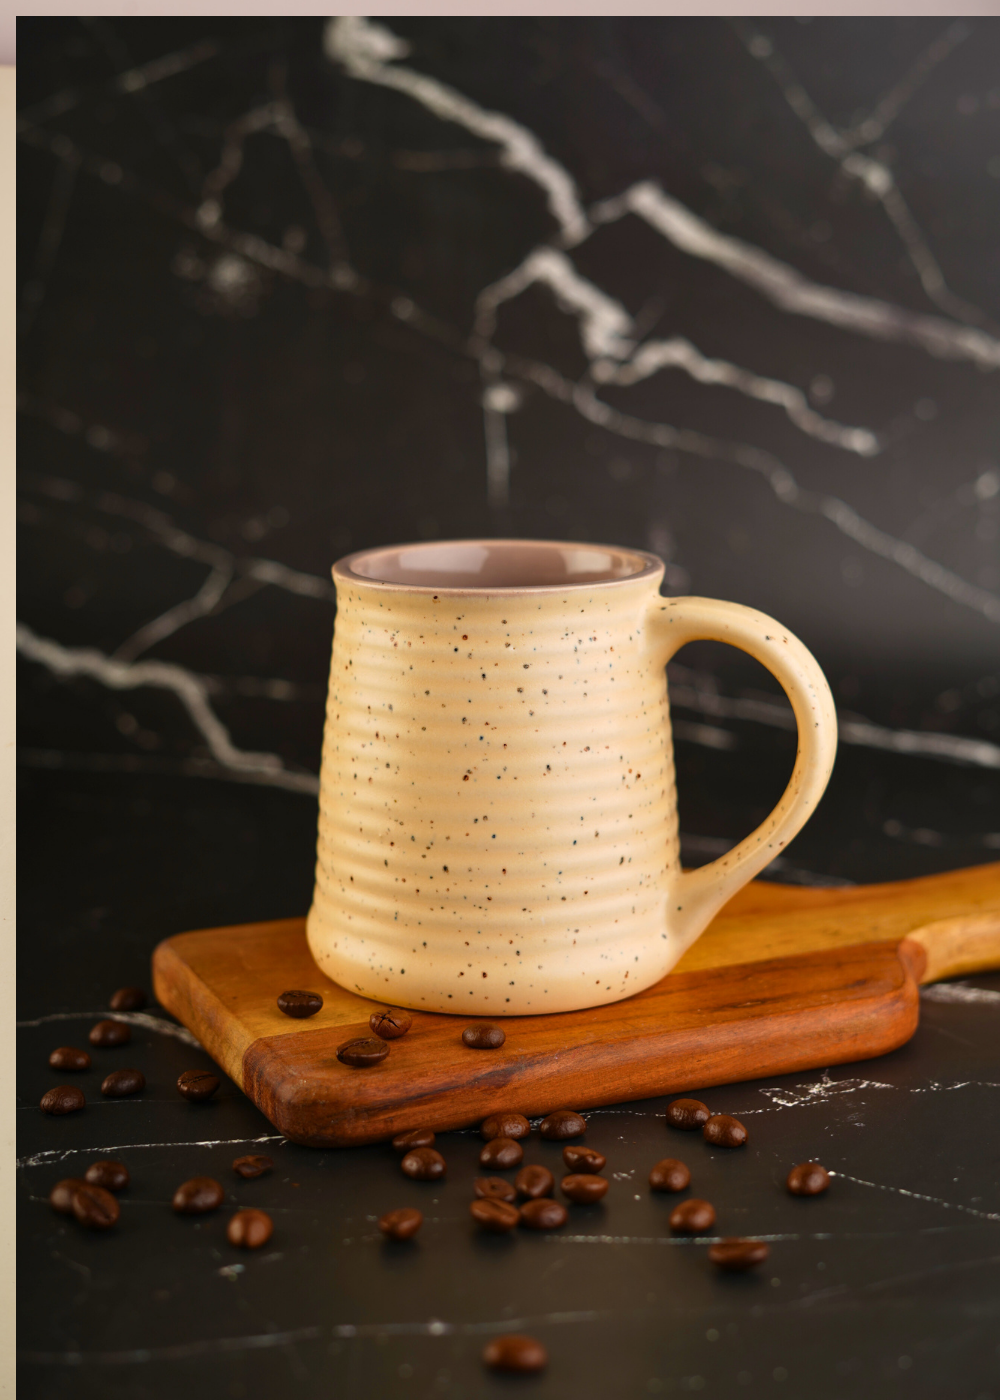 Handmade ceramic coffee mug with beans